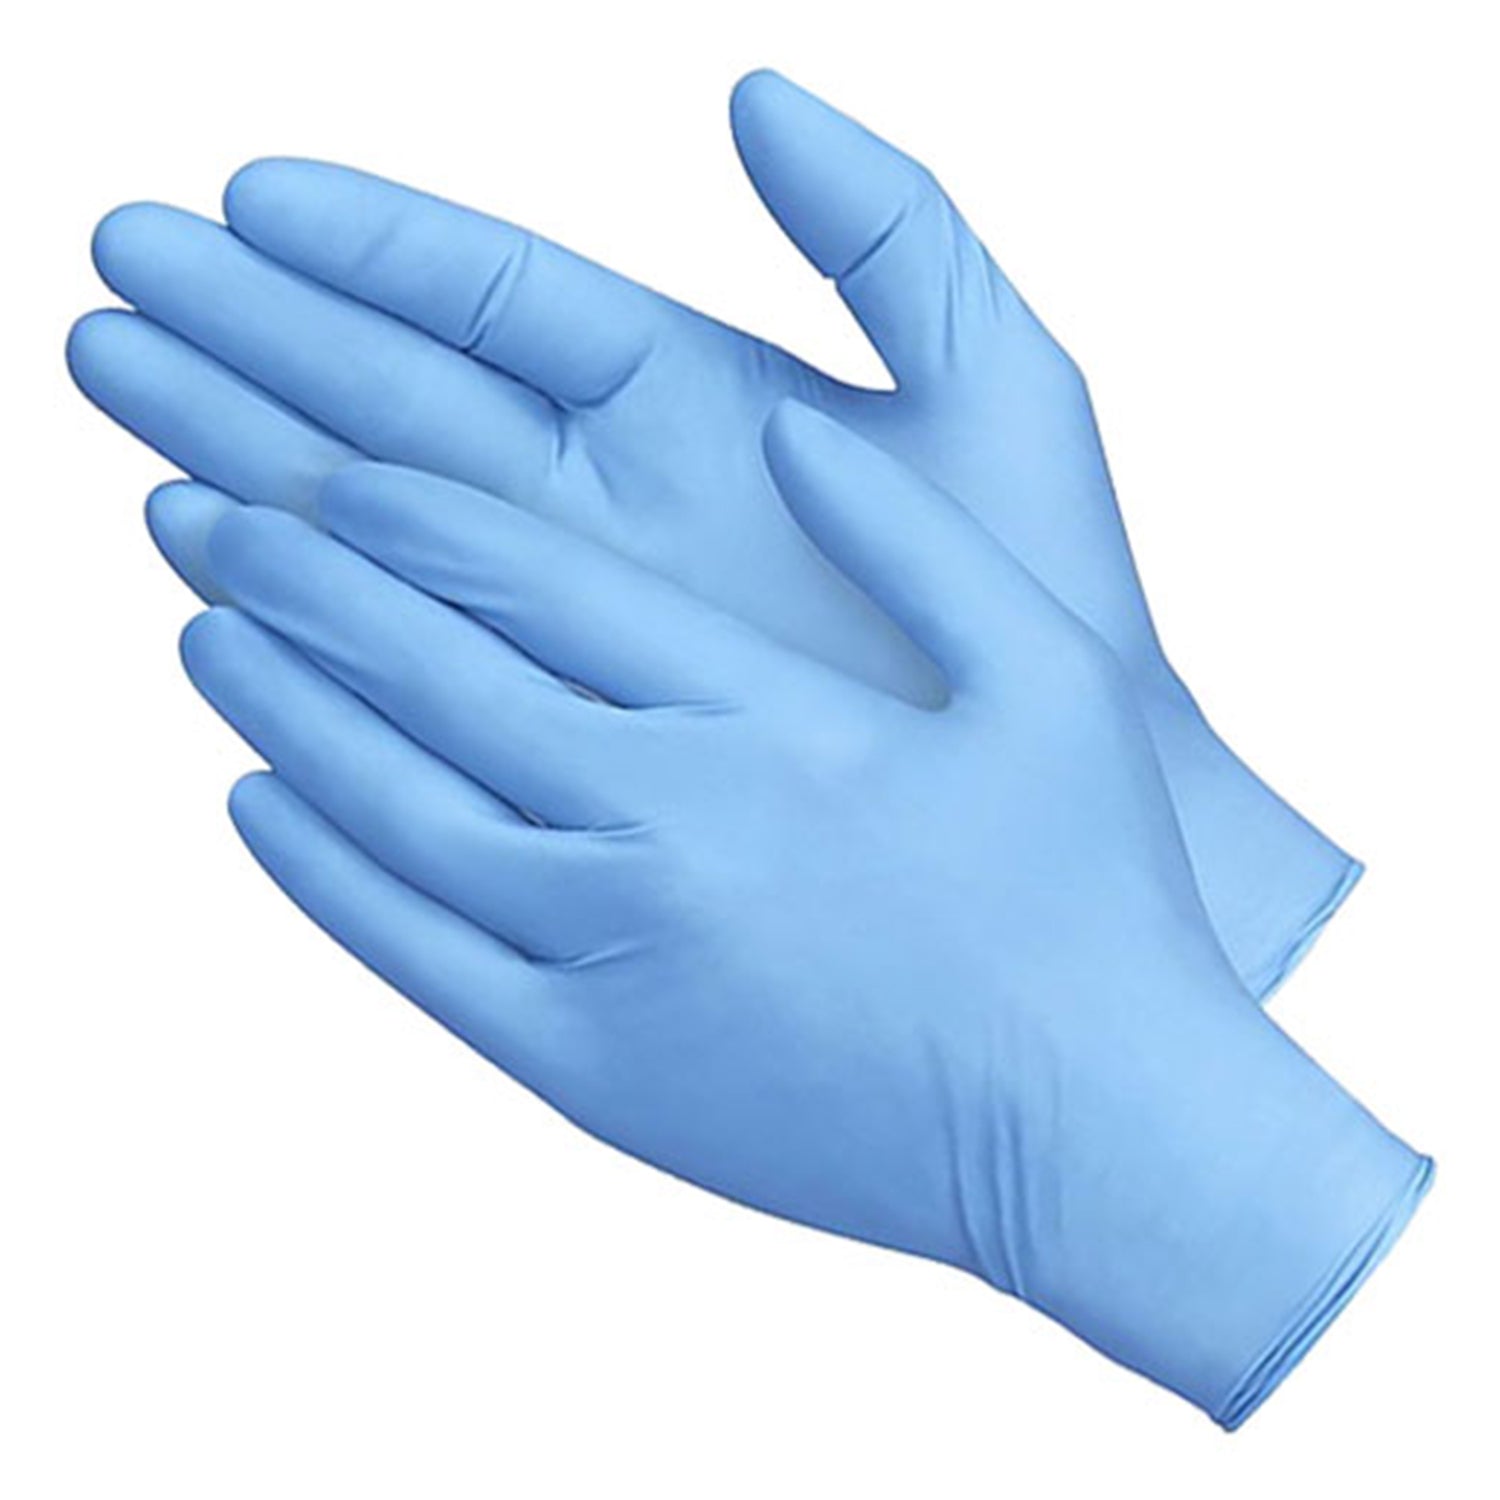 Premier AF Nitrile Examination Gloves | Sterile | Latex Free | Large | Pack of 50 Pairs (4)